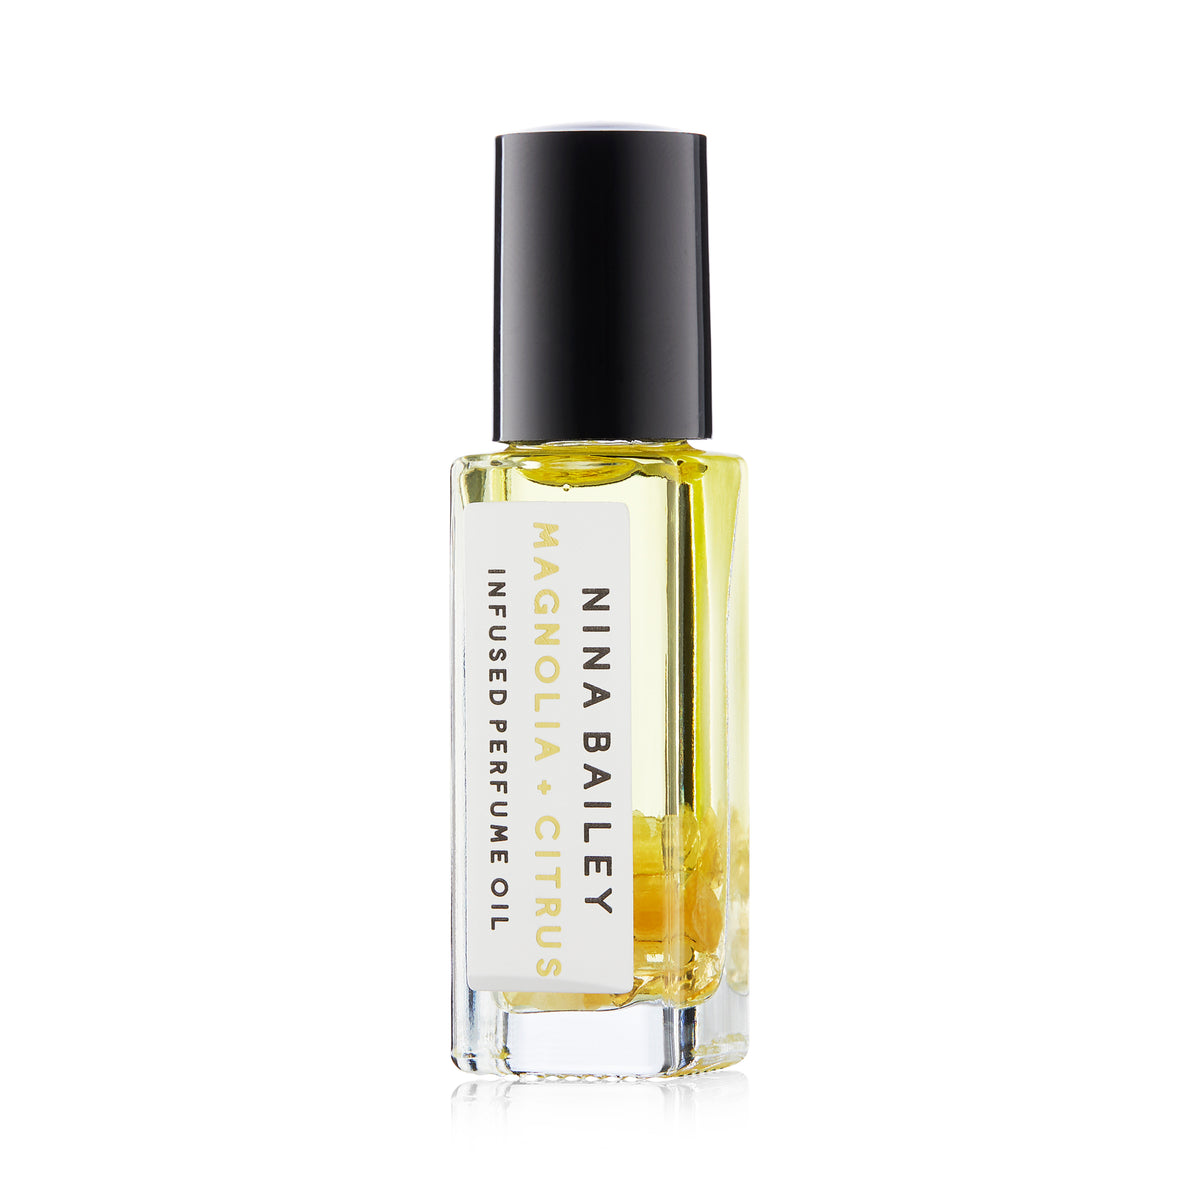 Citrus and Magnolia Crystal Infused Perfume Oil